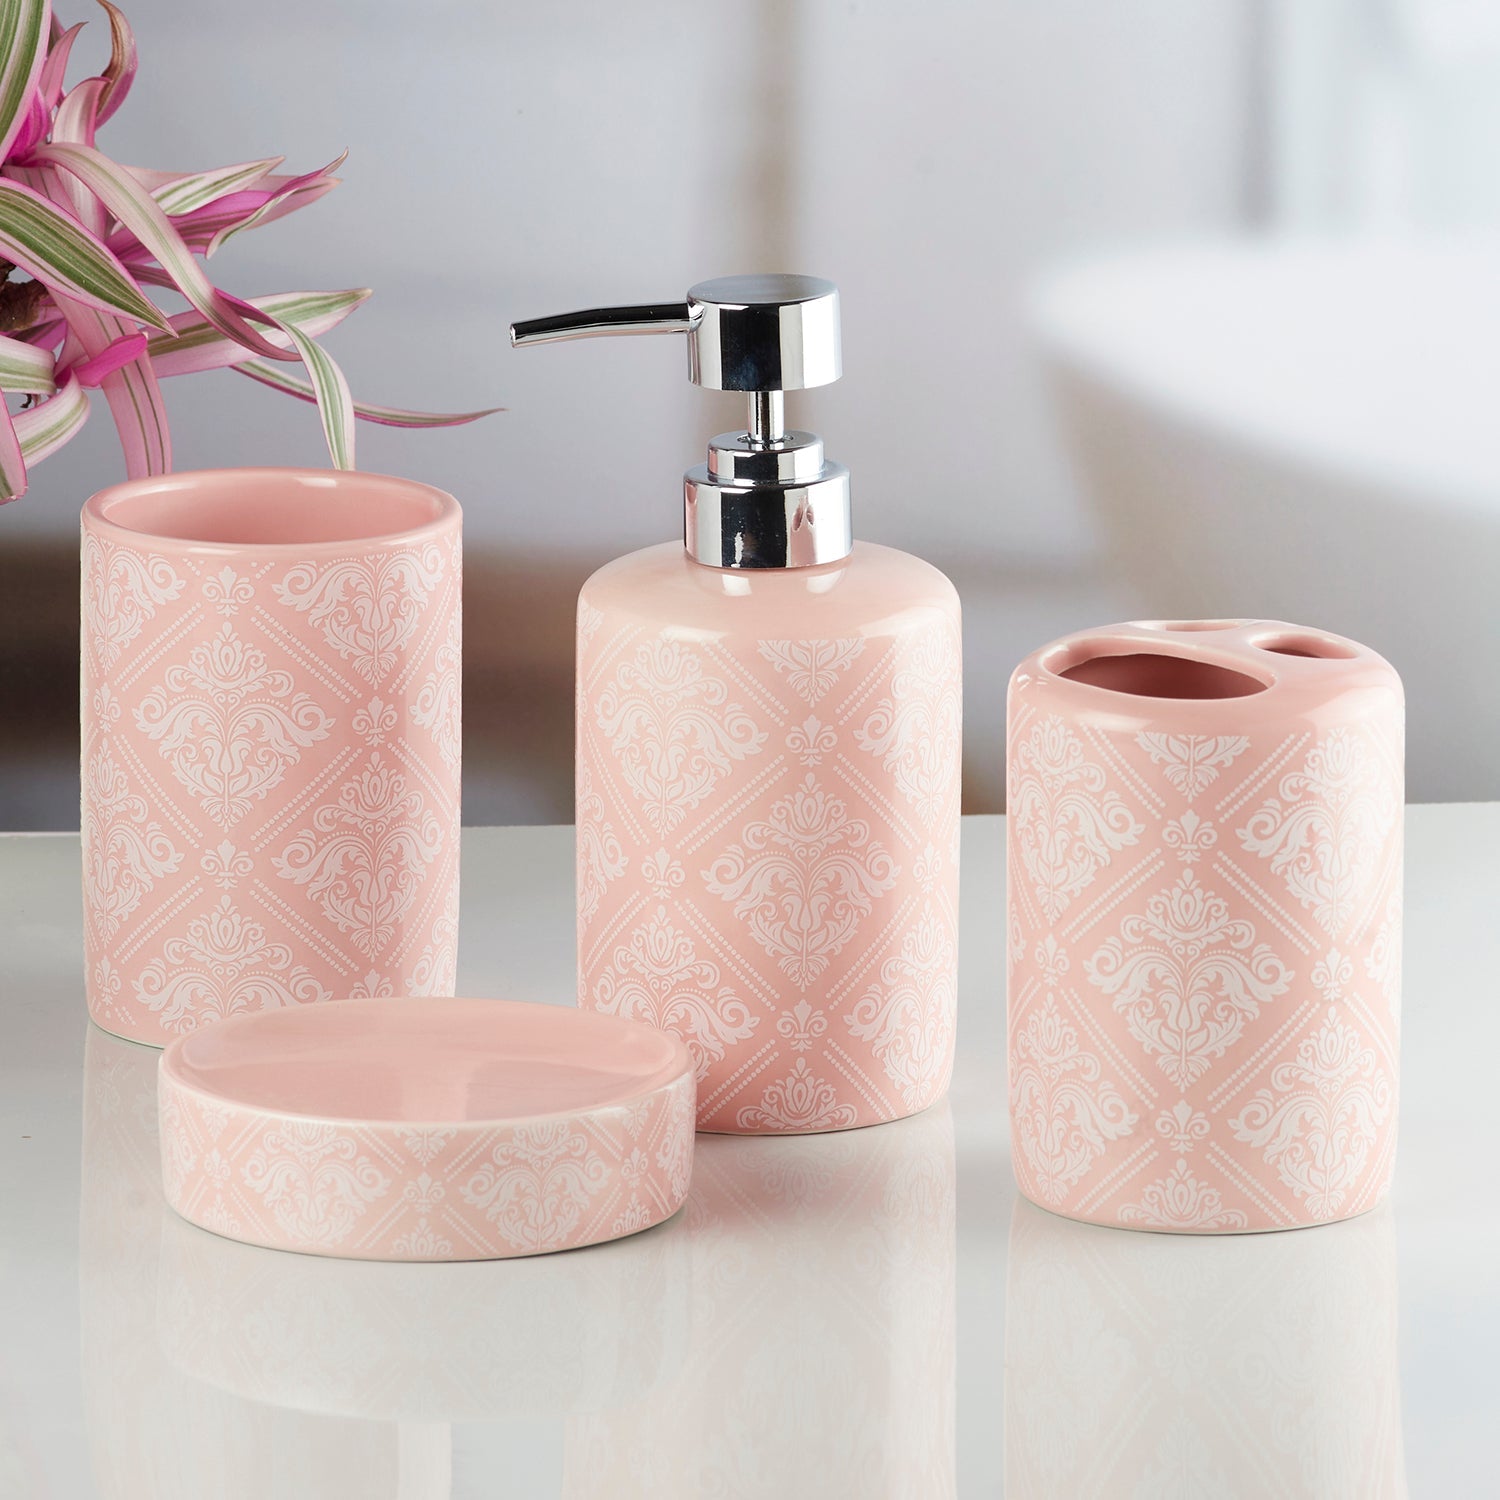 Ceramic Bathroom Accessories Set of 4 Bath Set with Soap Dispenser (8217)